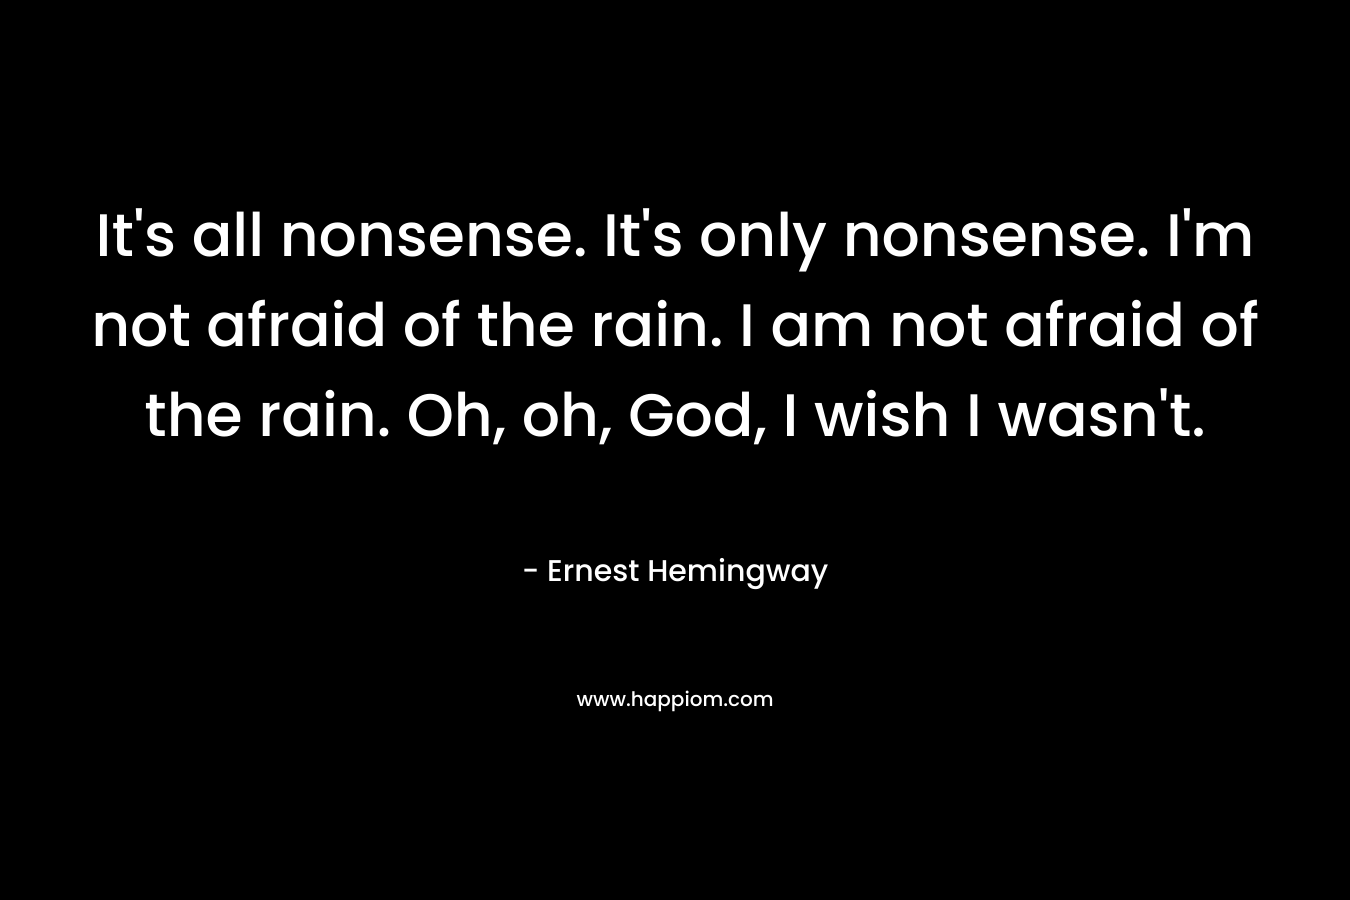 It's all nonsense. It's only nonsense. I'm not afraid of the rain. I am not afraid of the rain. Oh, oh, God, I wish I wasn't.